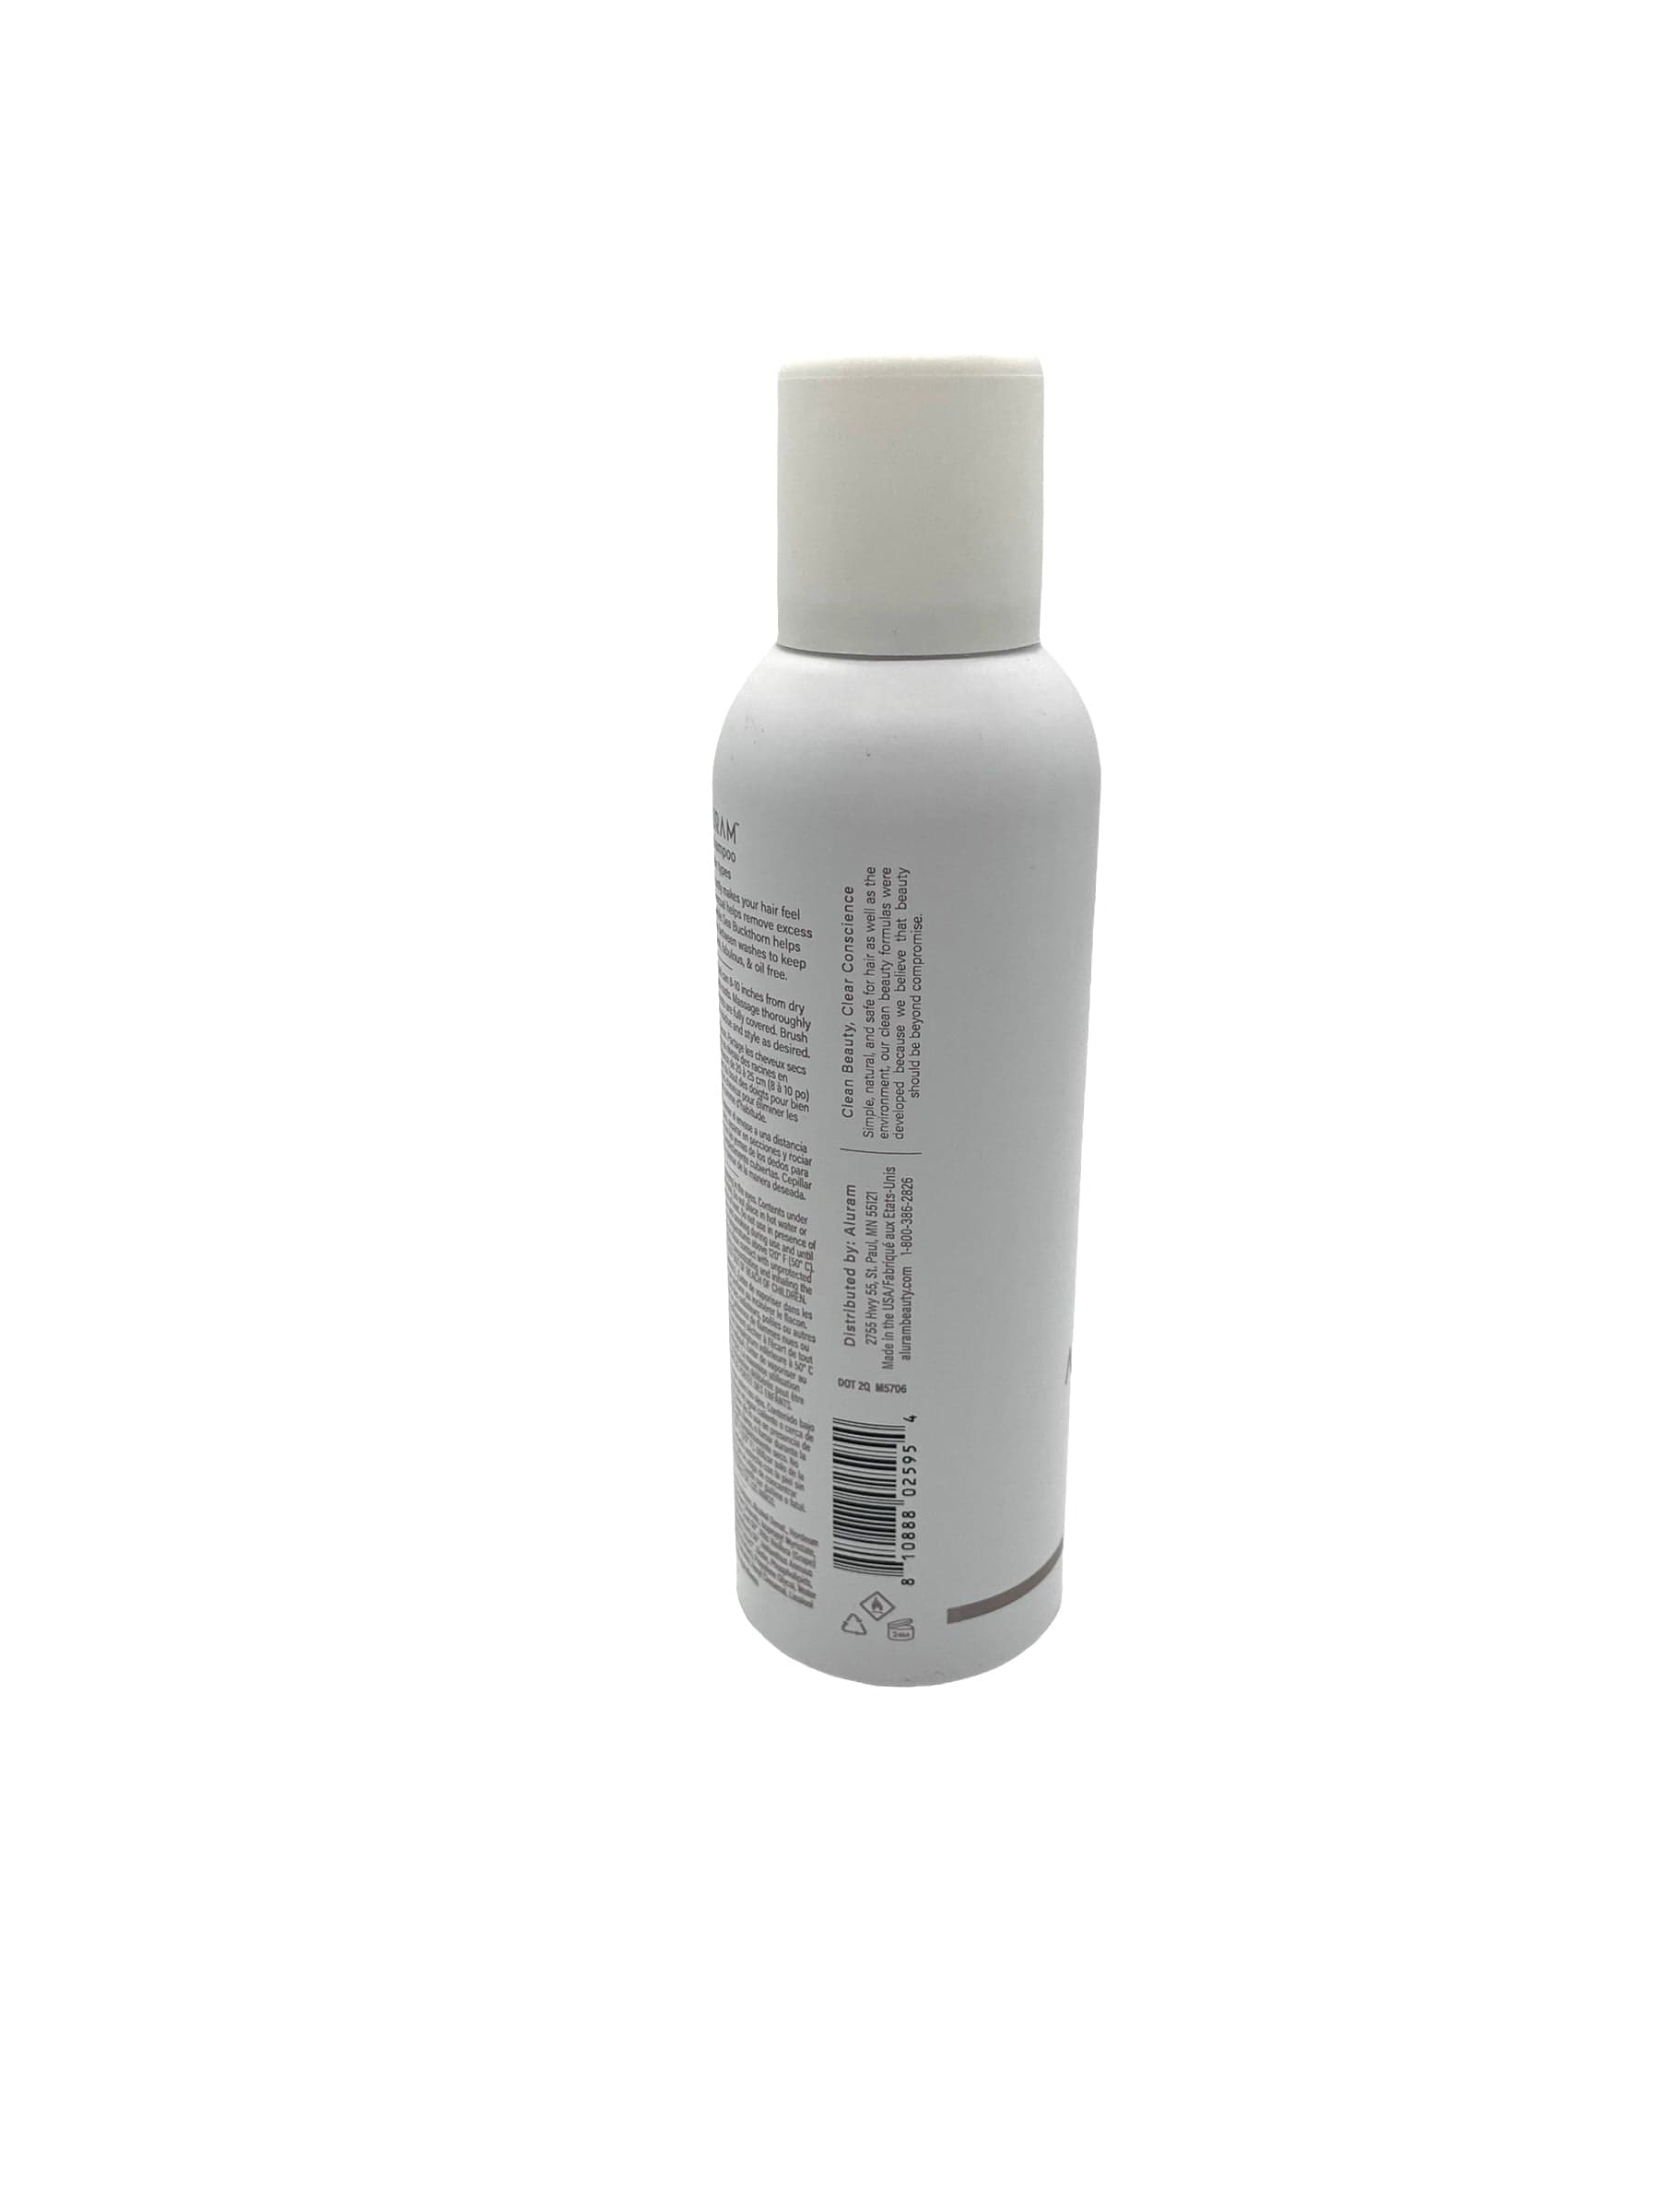 Keracolor Color Me Clean Charcoal Dry Shampoo 5 oz Dry Shampoo